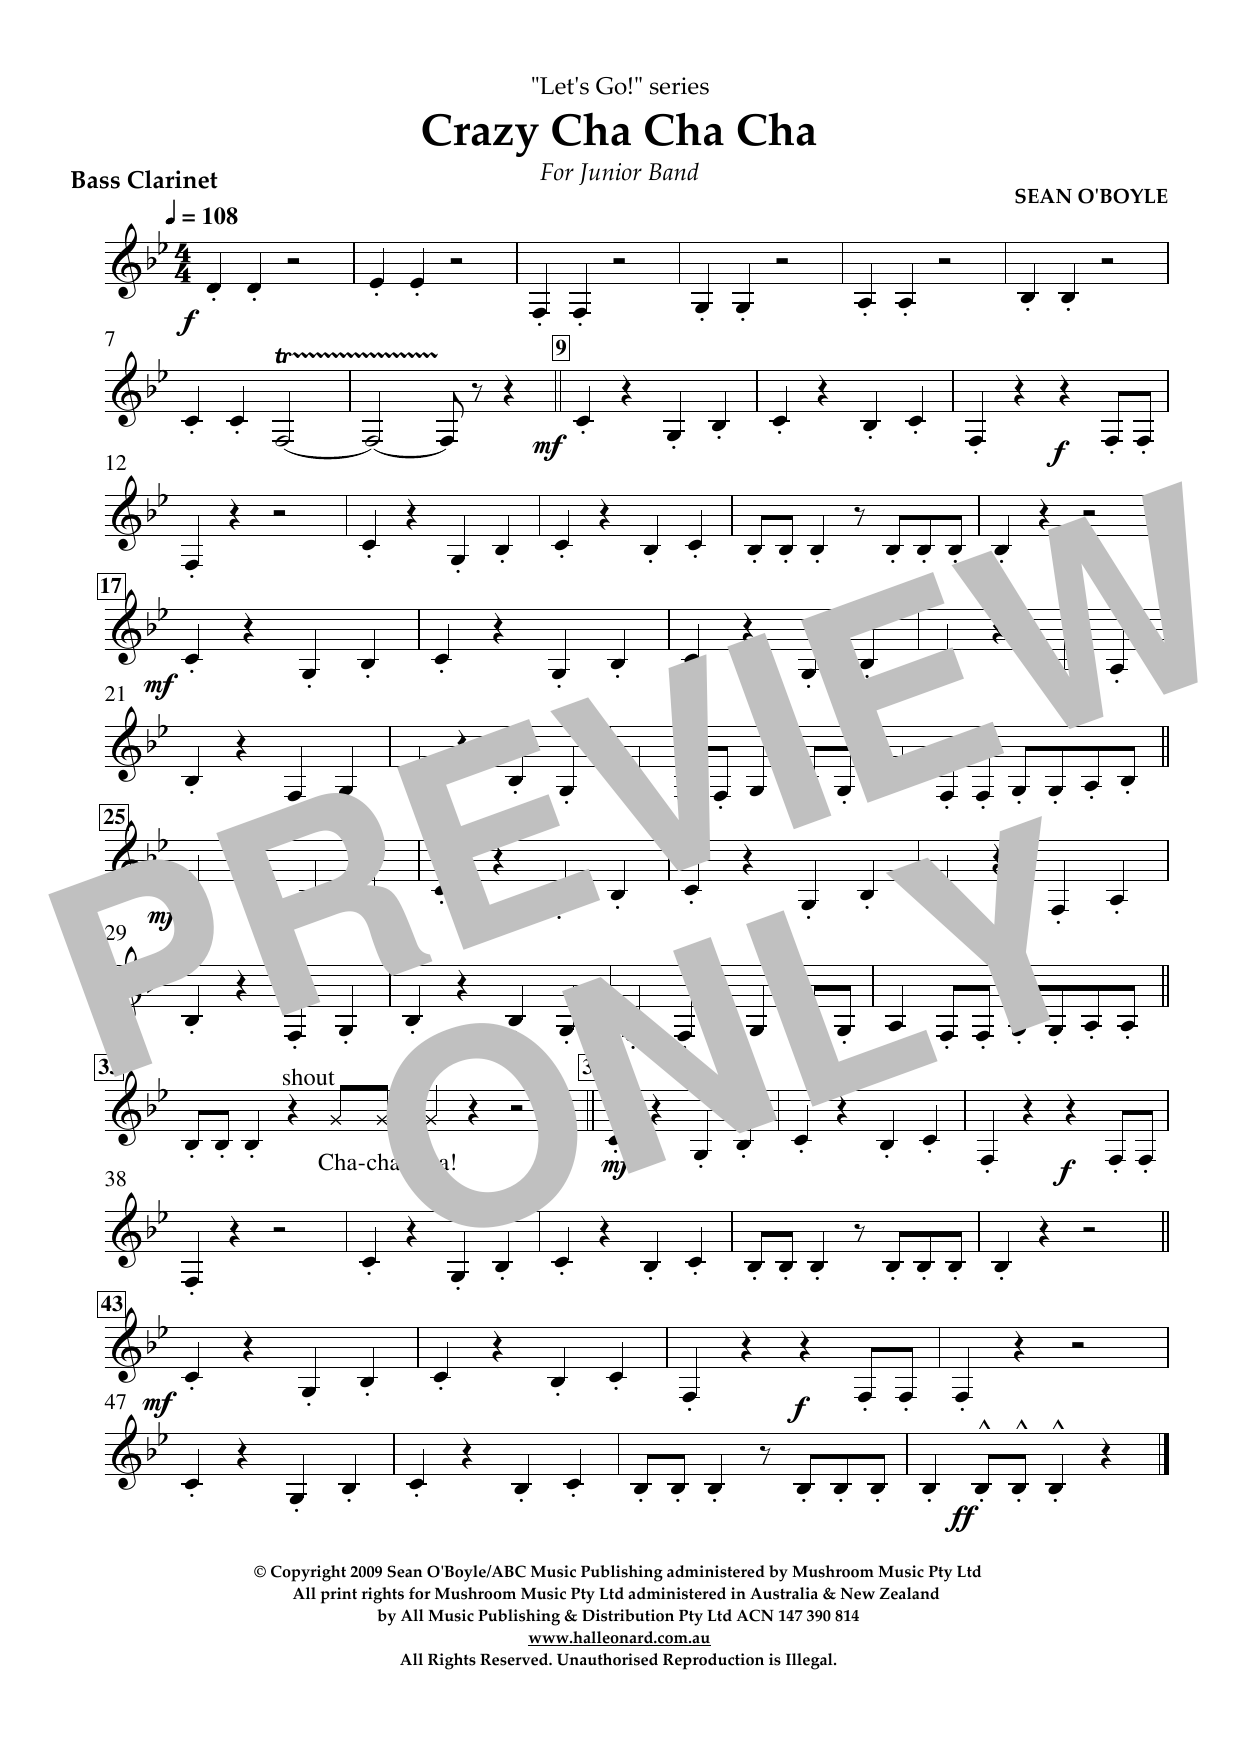 Sean O'Boyle Crazy Cha Cha Cha - Bass Clarinet Sheet Music Notes & Chords for Concert Band - Download or Print PDF